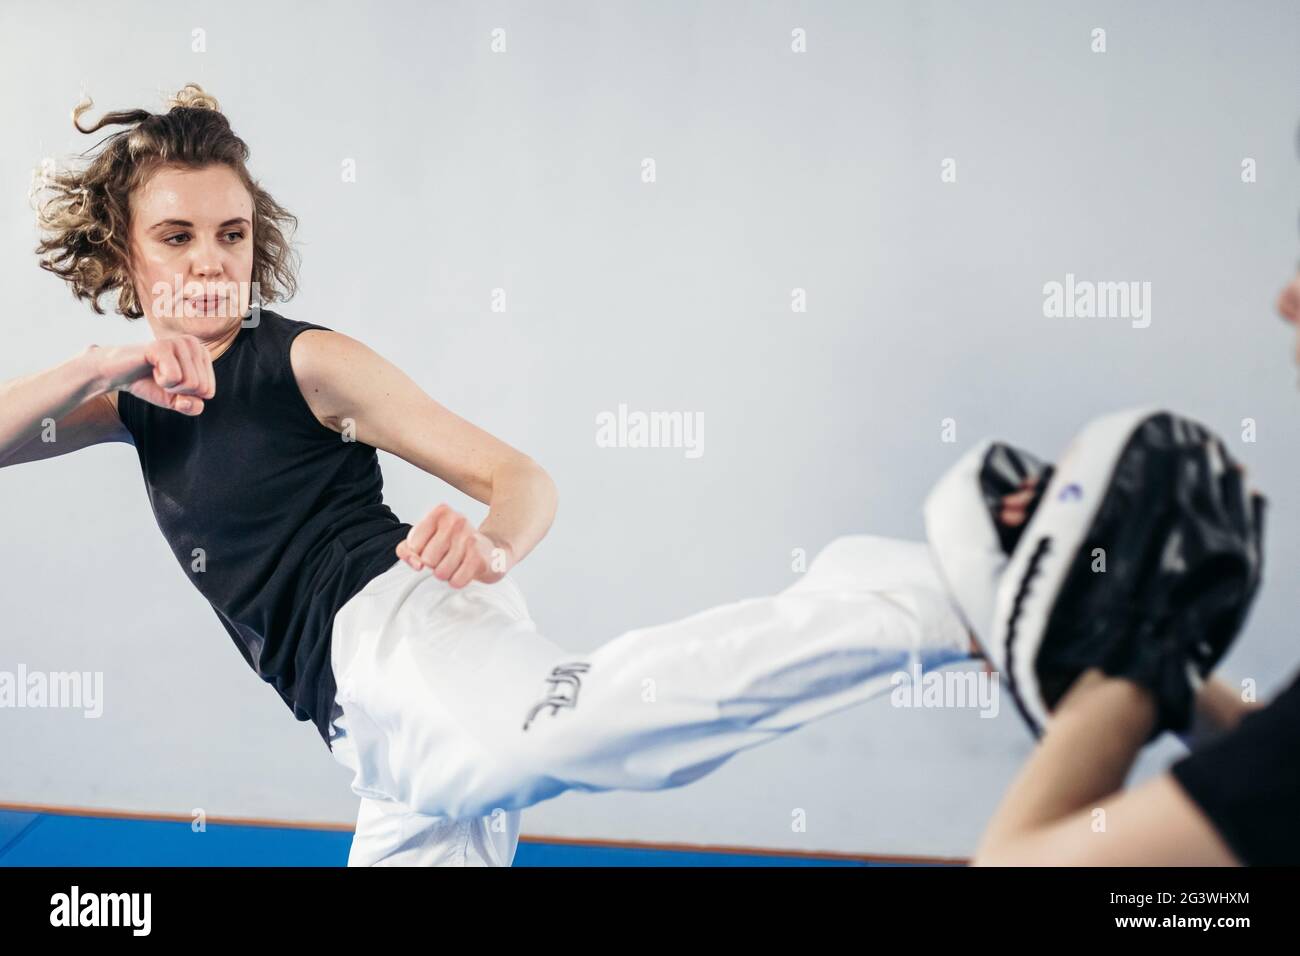 Female martial arts fighter practicing with trainer, punching taekwondo kick pad exercise kicking. Training of kickboxer woman s Stock Photo